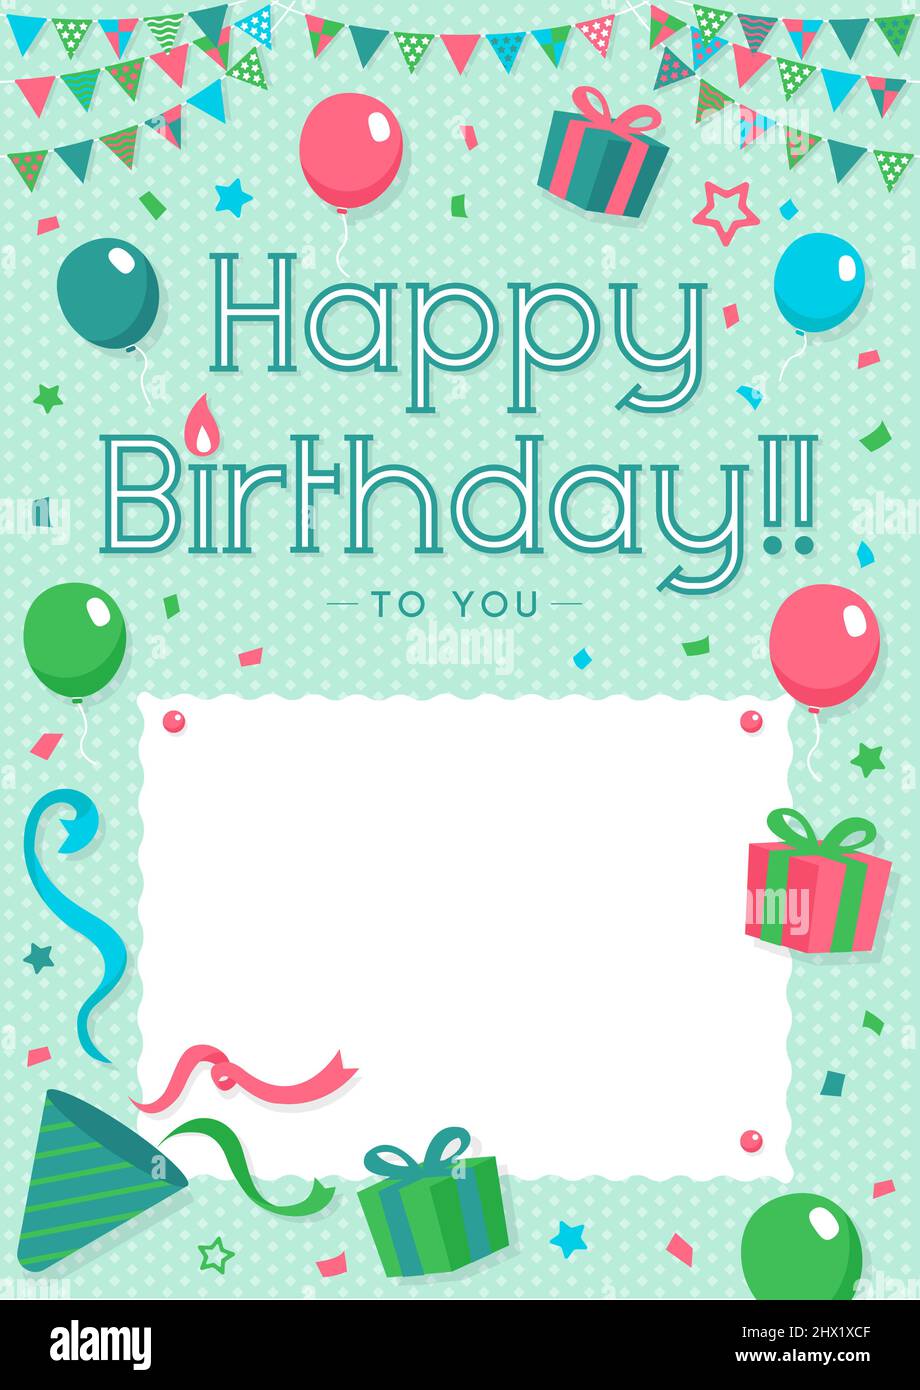 Happy birthday greeting card vector illustration Stock Vector Image ...